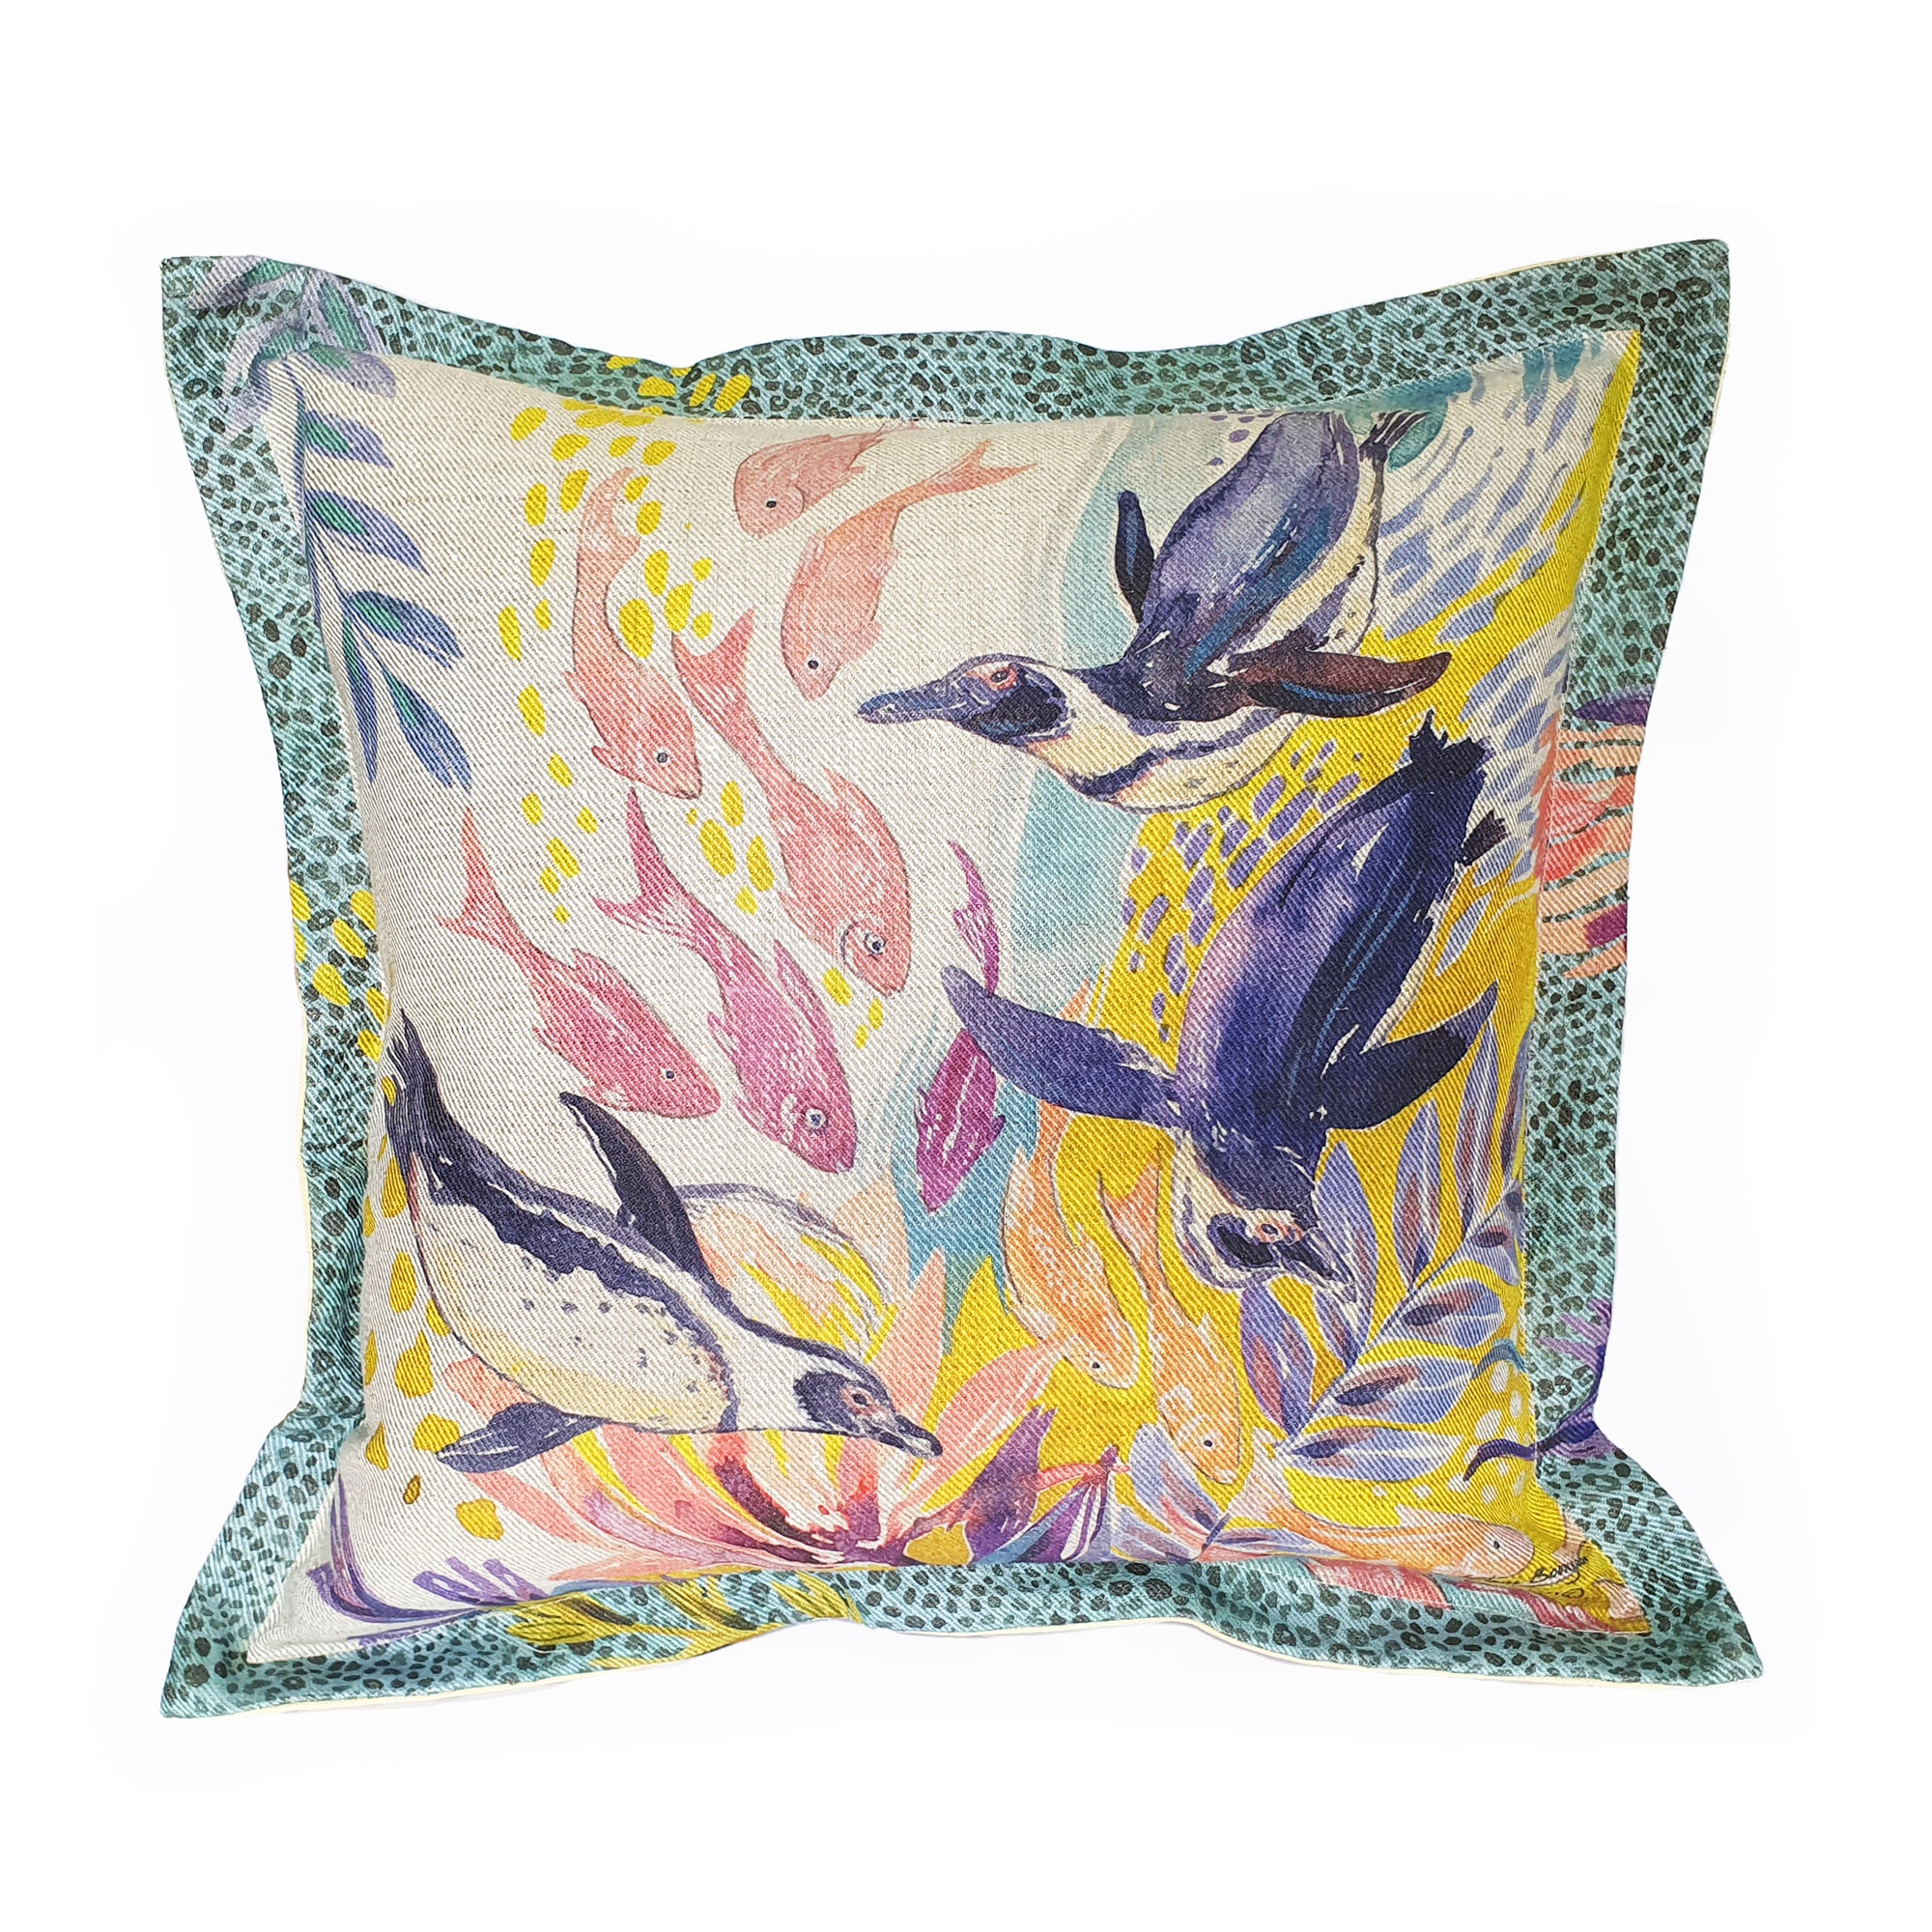 Swimming Penguin Cushion Cover, Standard, Jacquard Weave linen